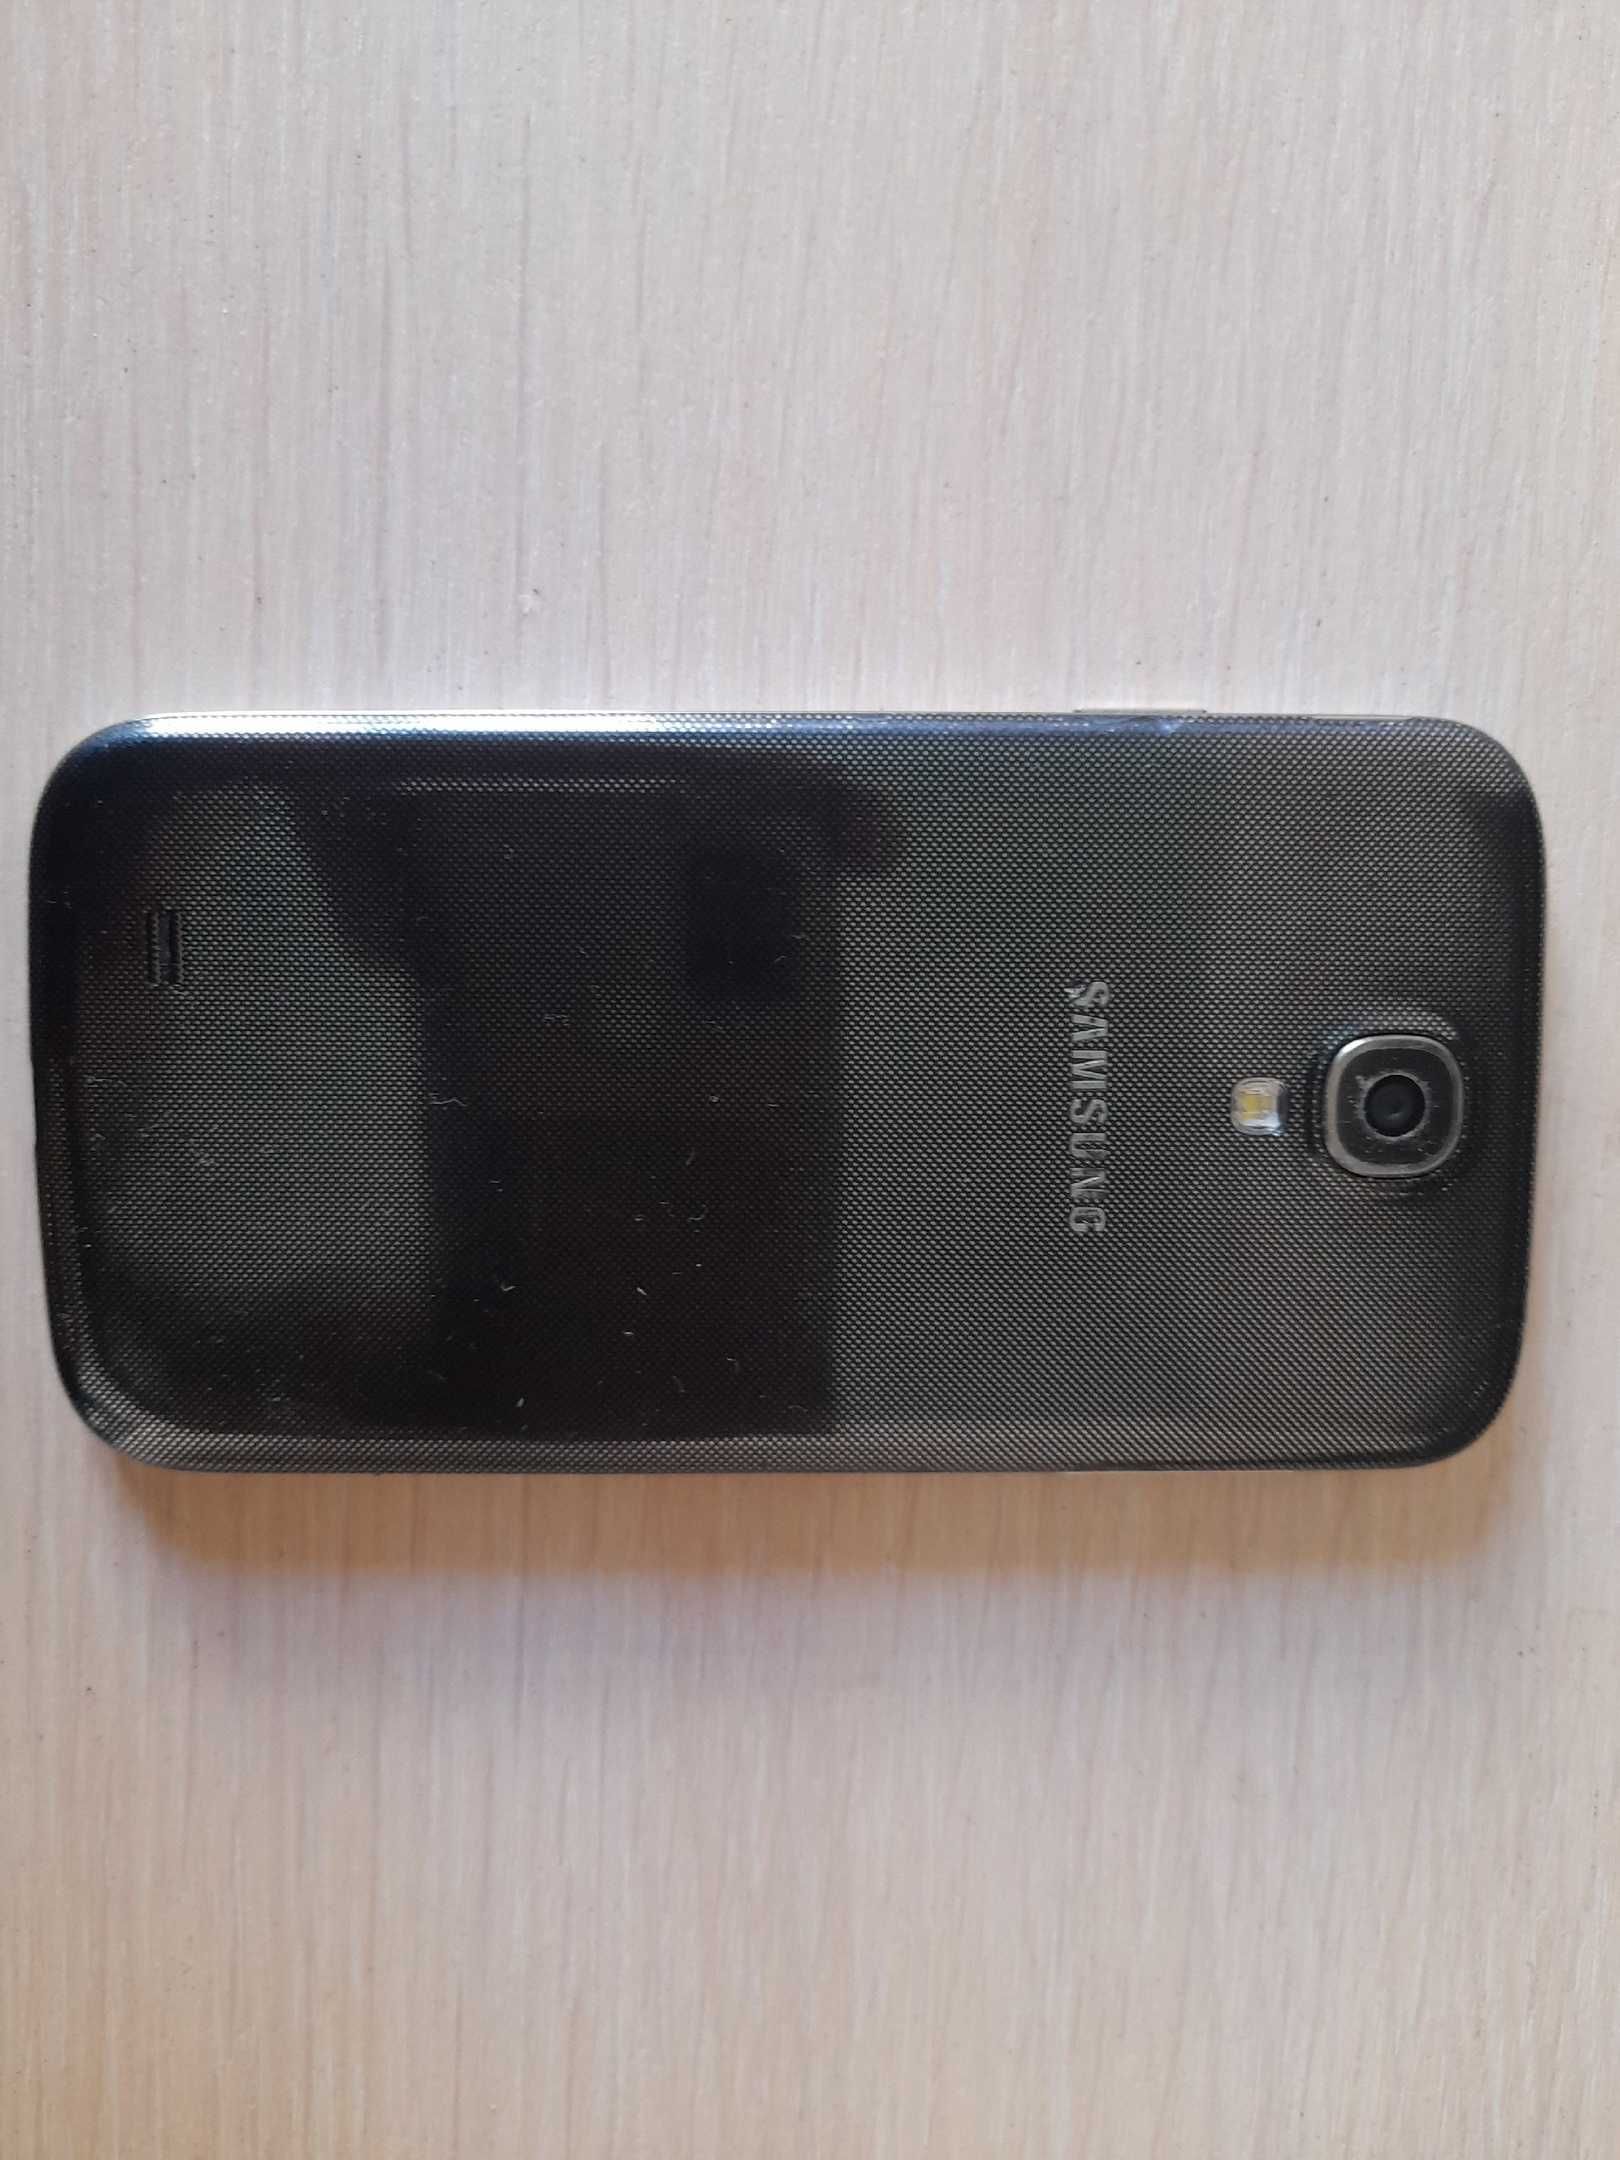 Samsung galaxy s4 gt-i9505